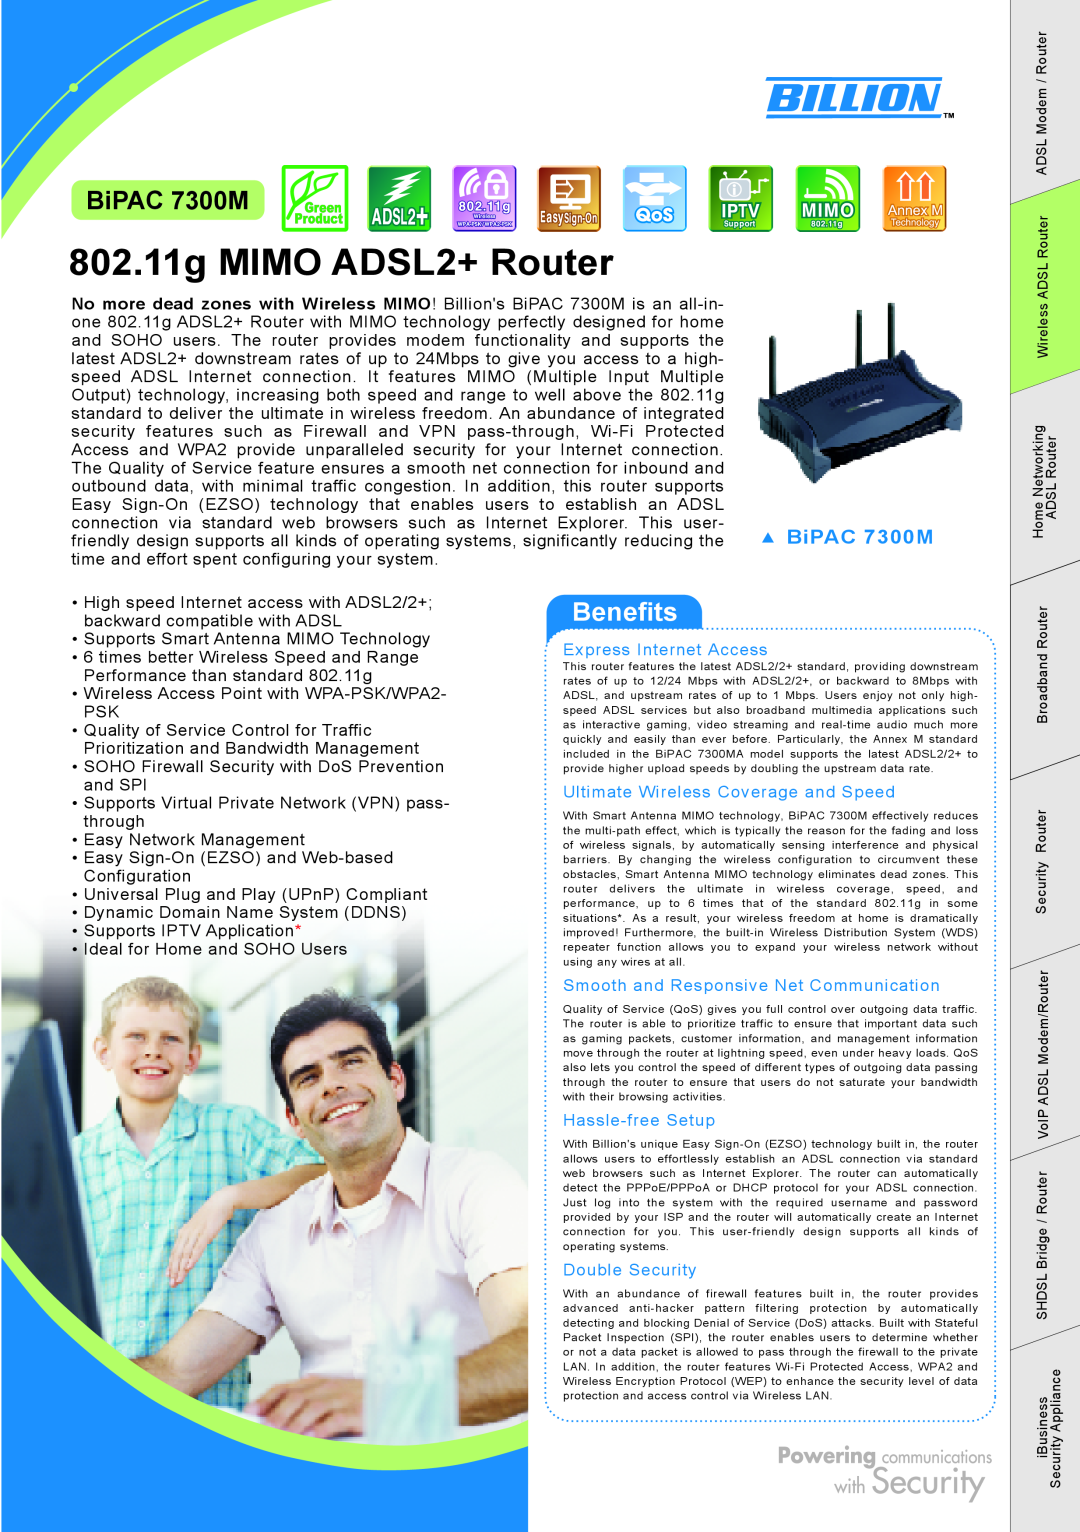 Billion Electric Company BIPAC 7300M manual 802.11g MIMO ADSL2+ Router, BiPAC 7300M, Benefits, Express Internet Access 